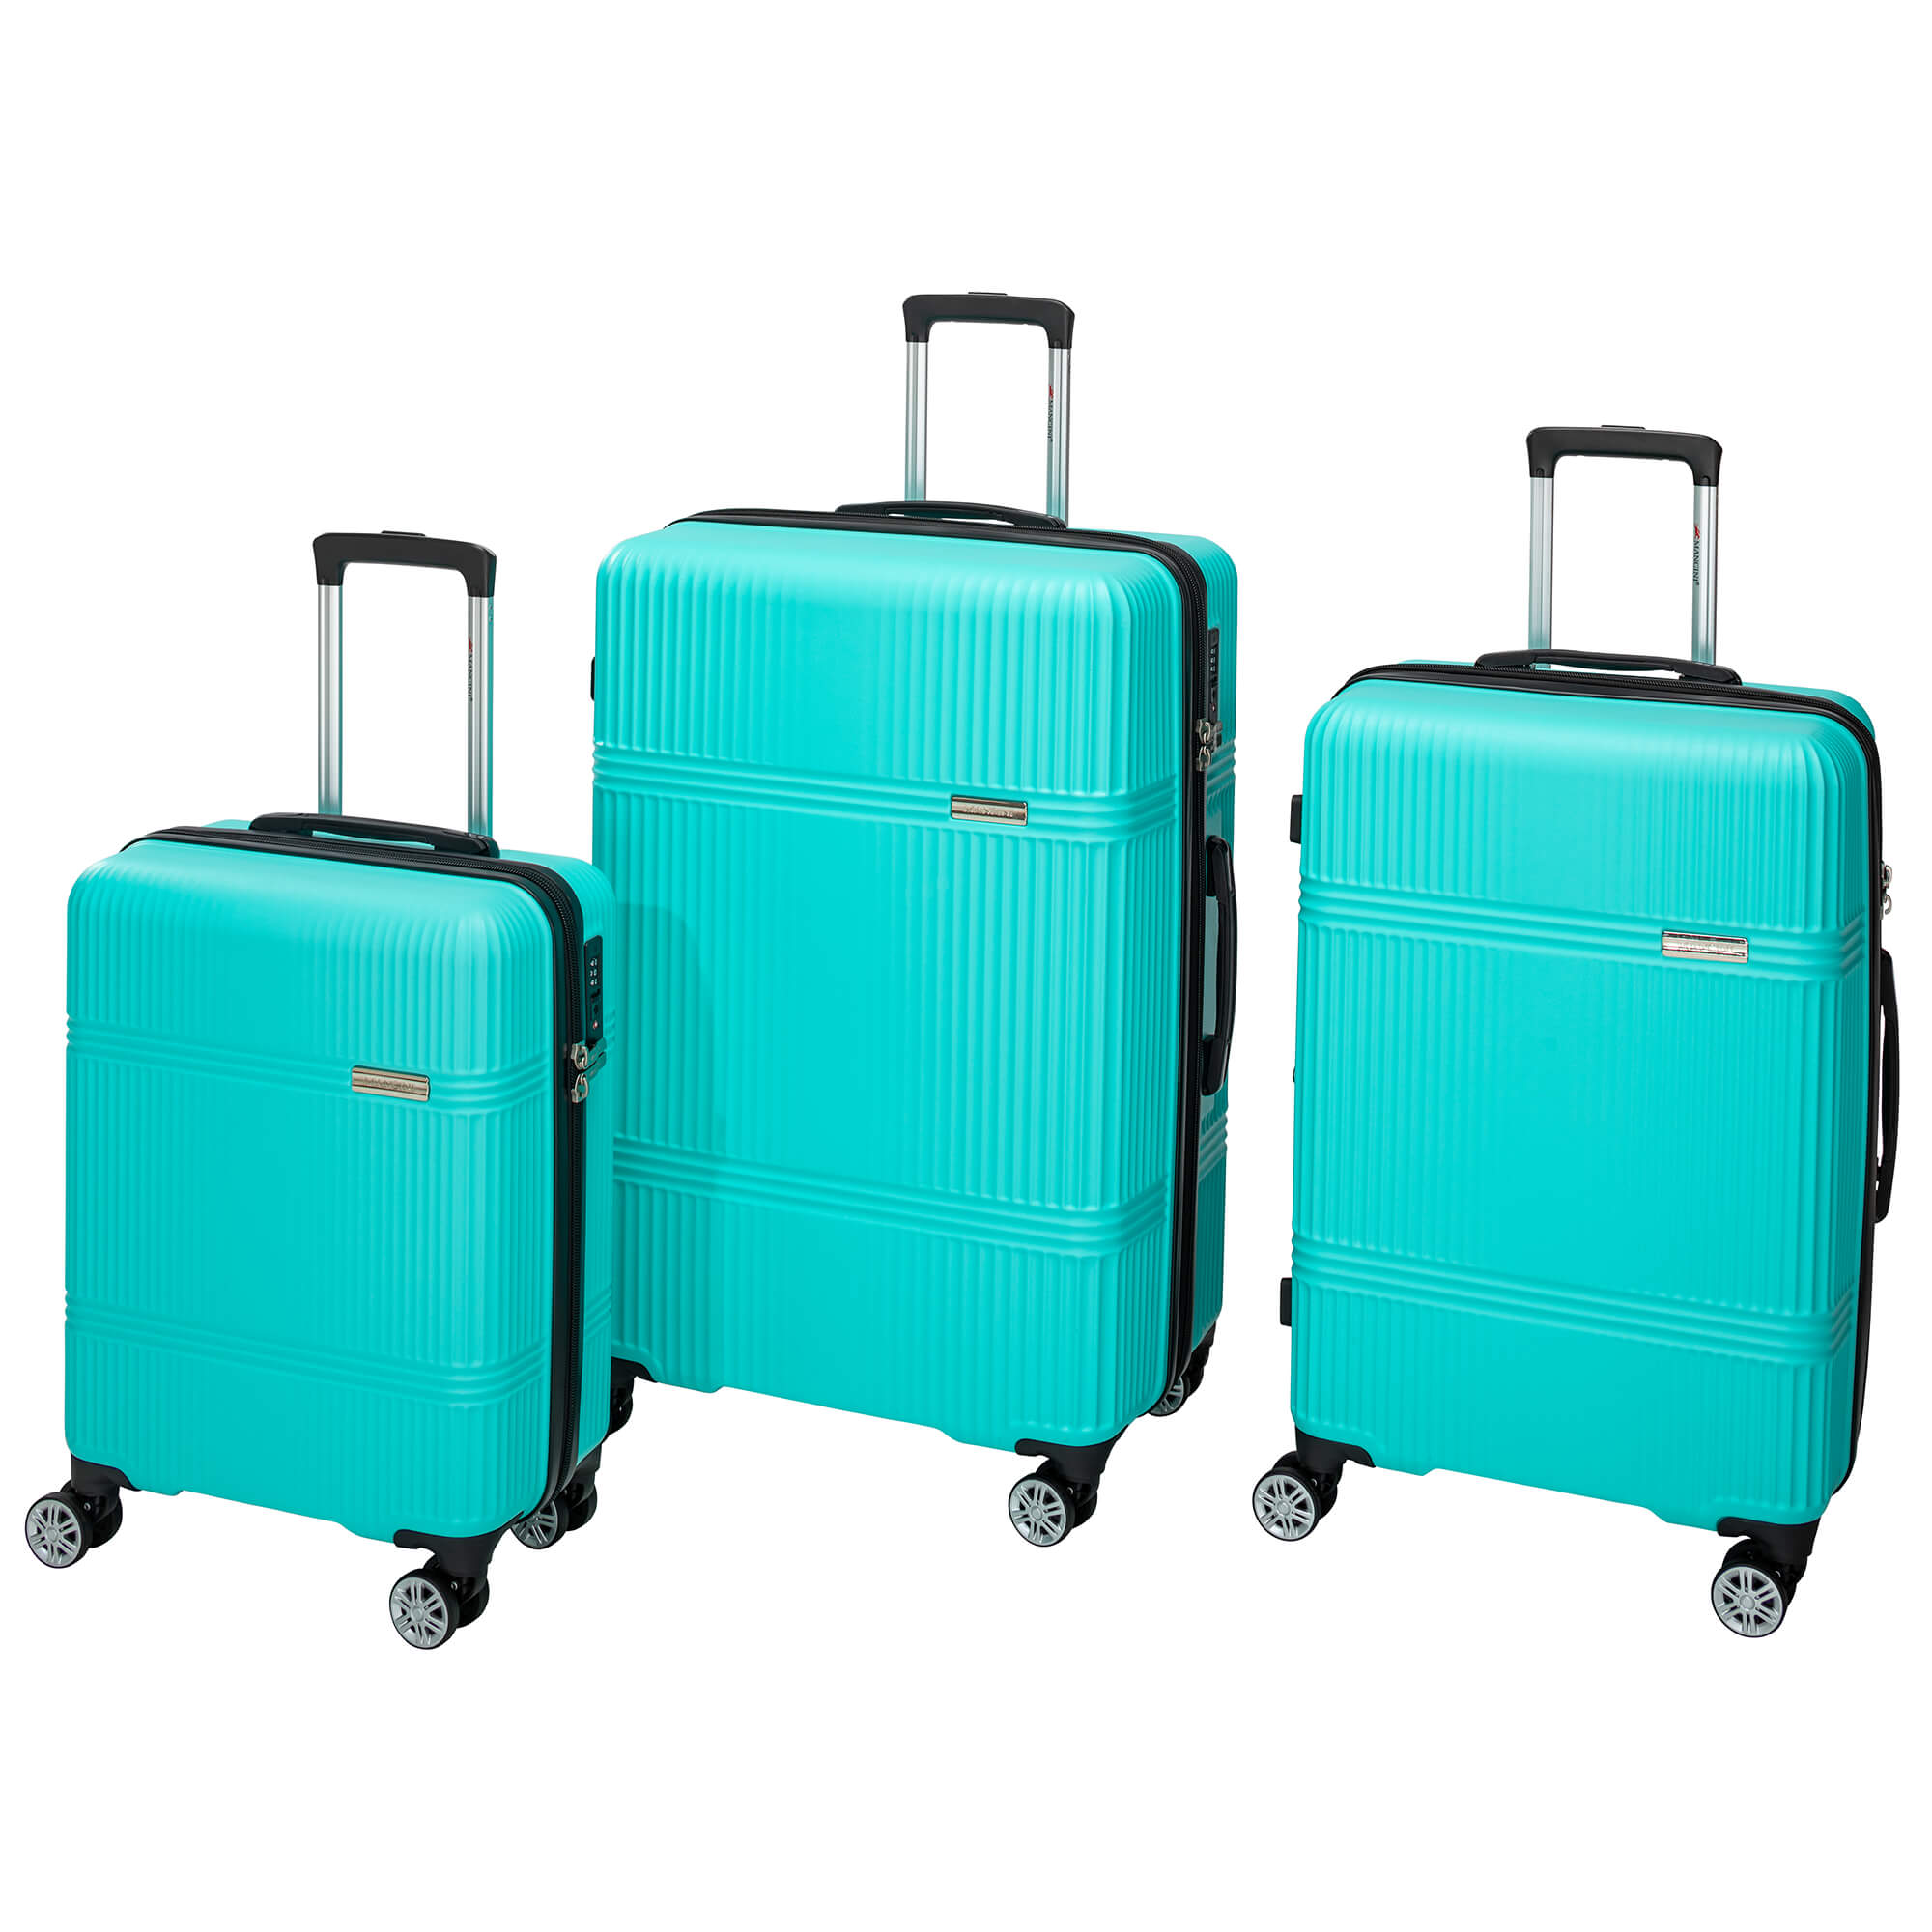 2019 new personality mini luggage suitcase fashion hard shell